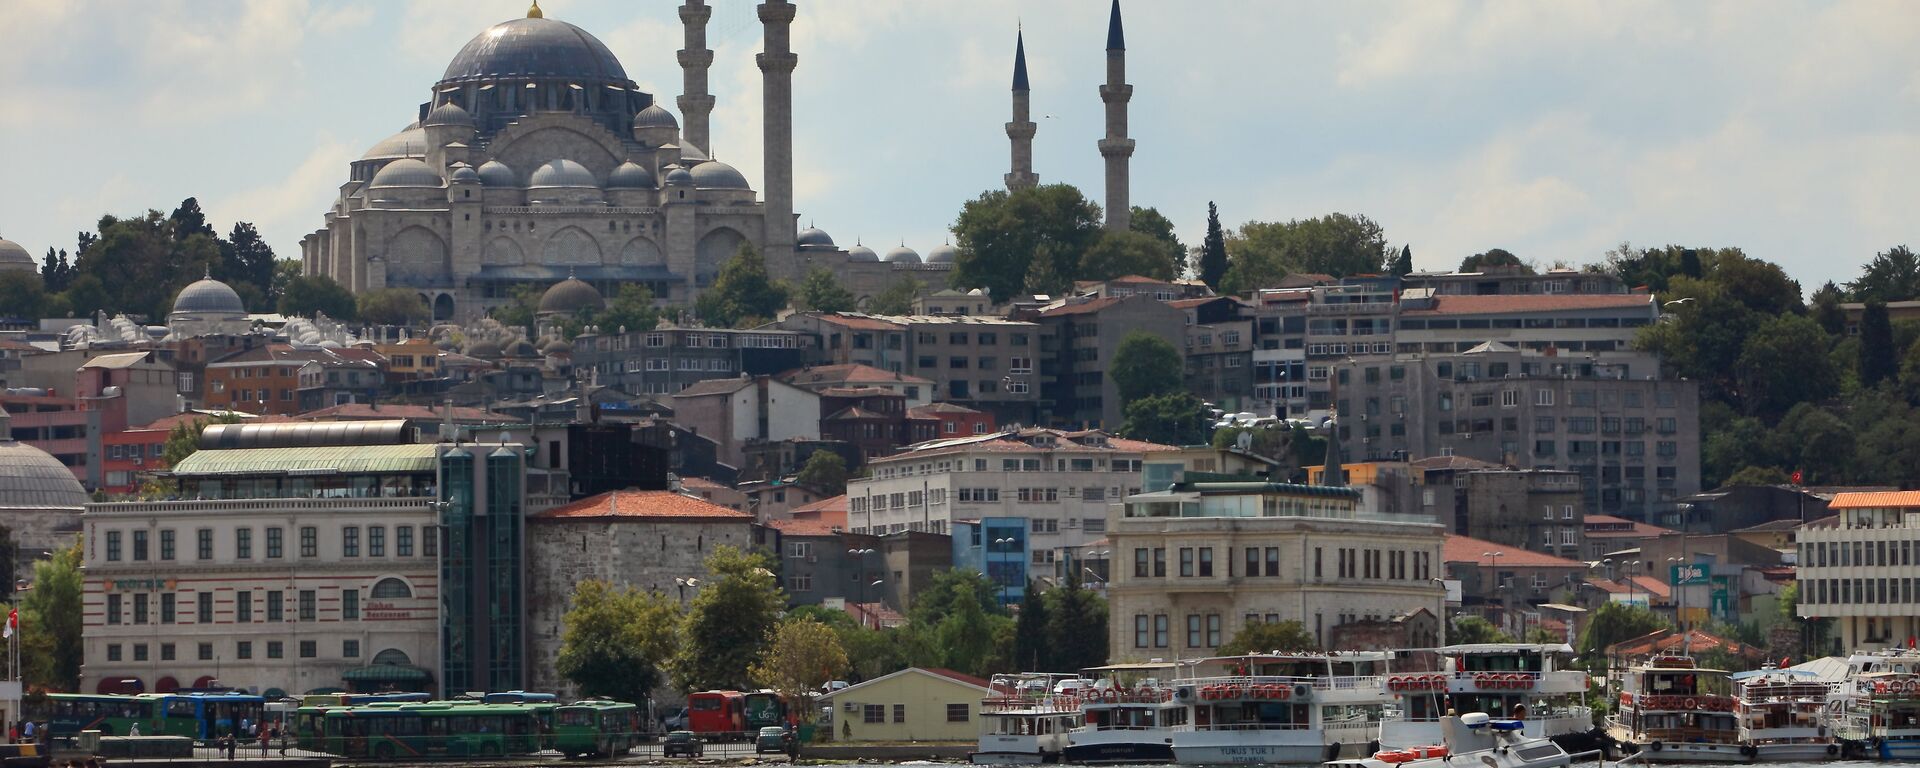 View of the Blue Mosque across the Bosphorus, Istanbul - Sputnik International, 1920, 06.12.2015